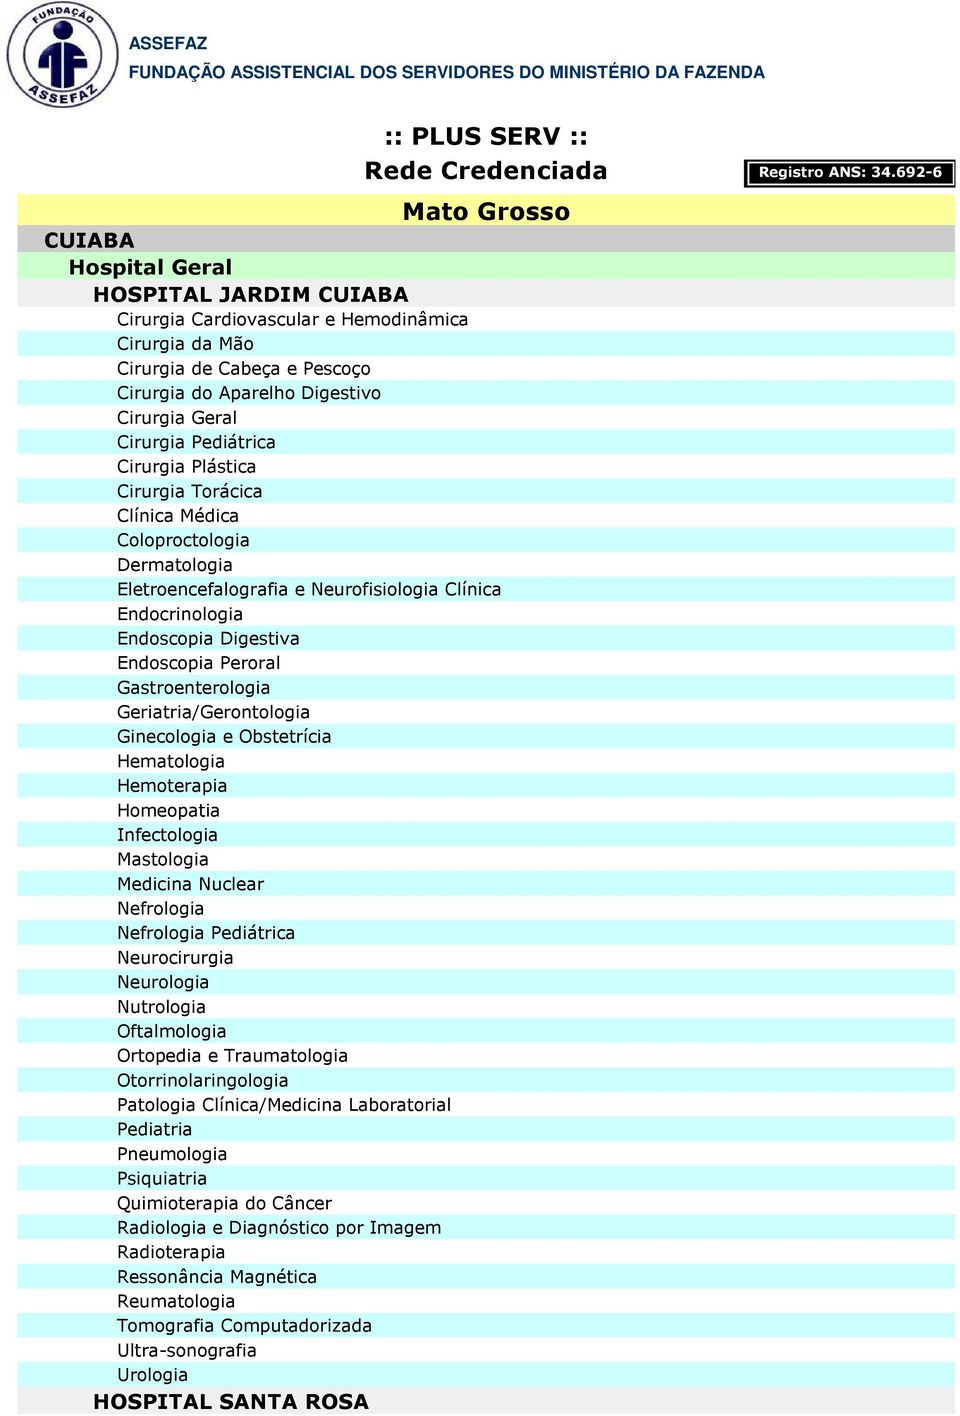 Endoscopia Peroral Geriatria/Gerontologia Hemoterapia Homeopatia Infectologia Mastologia Medicina Nuclear